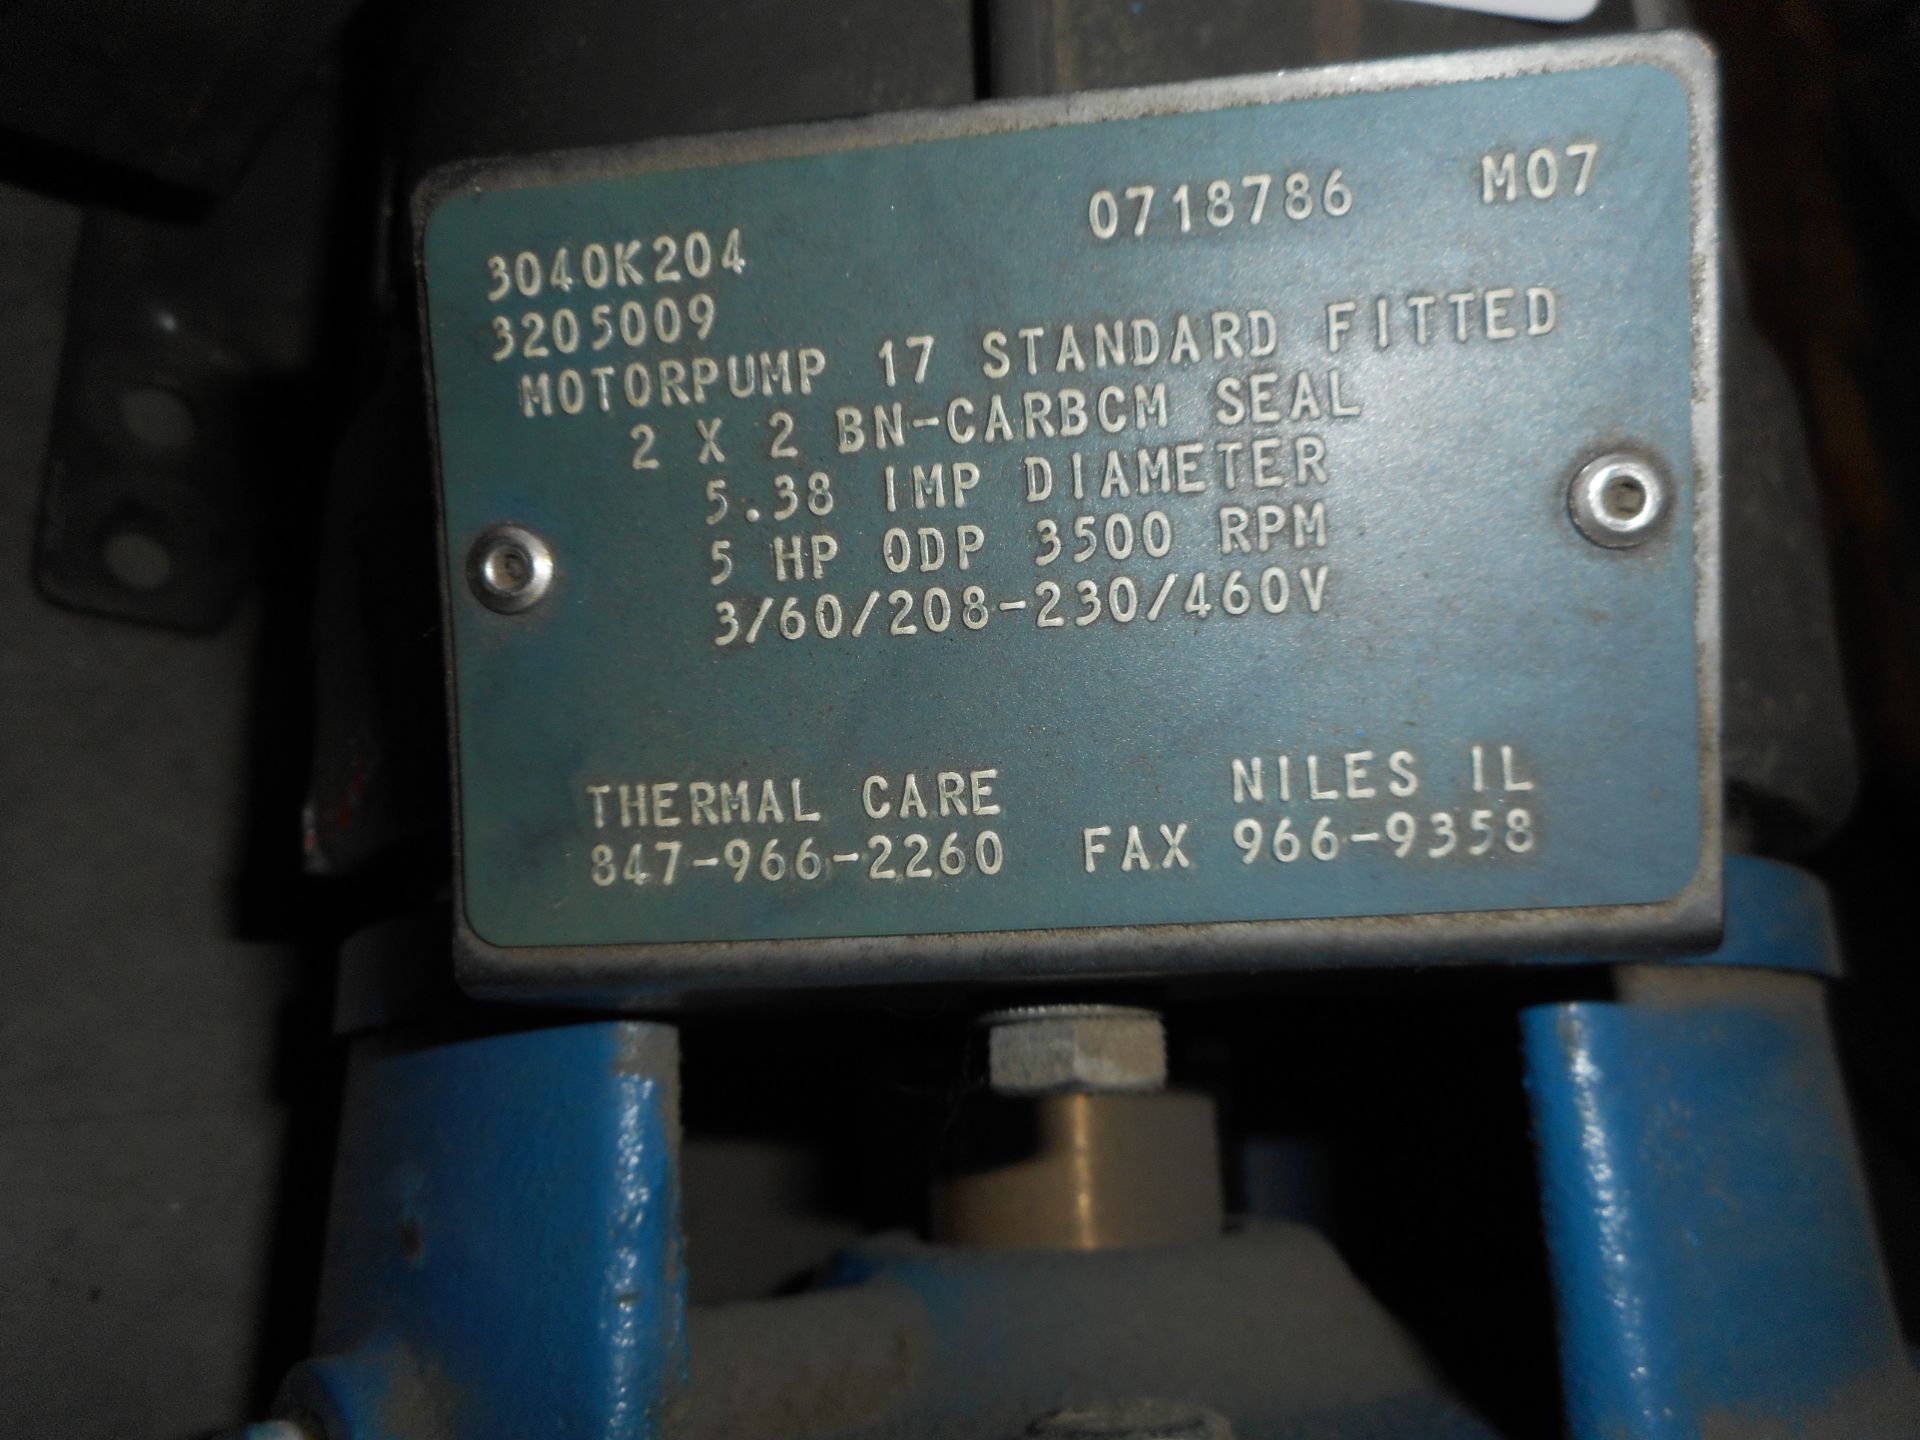 THERMAL CARE Pump motor 3205009 - Image 7 of 7